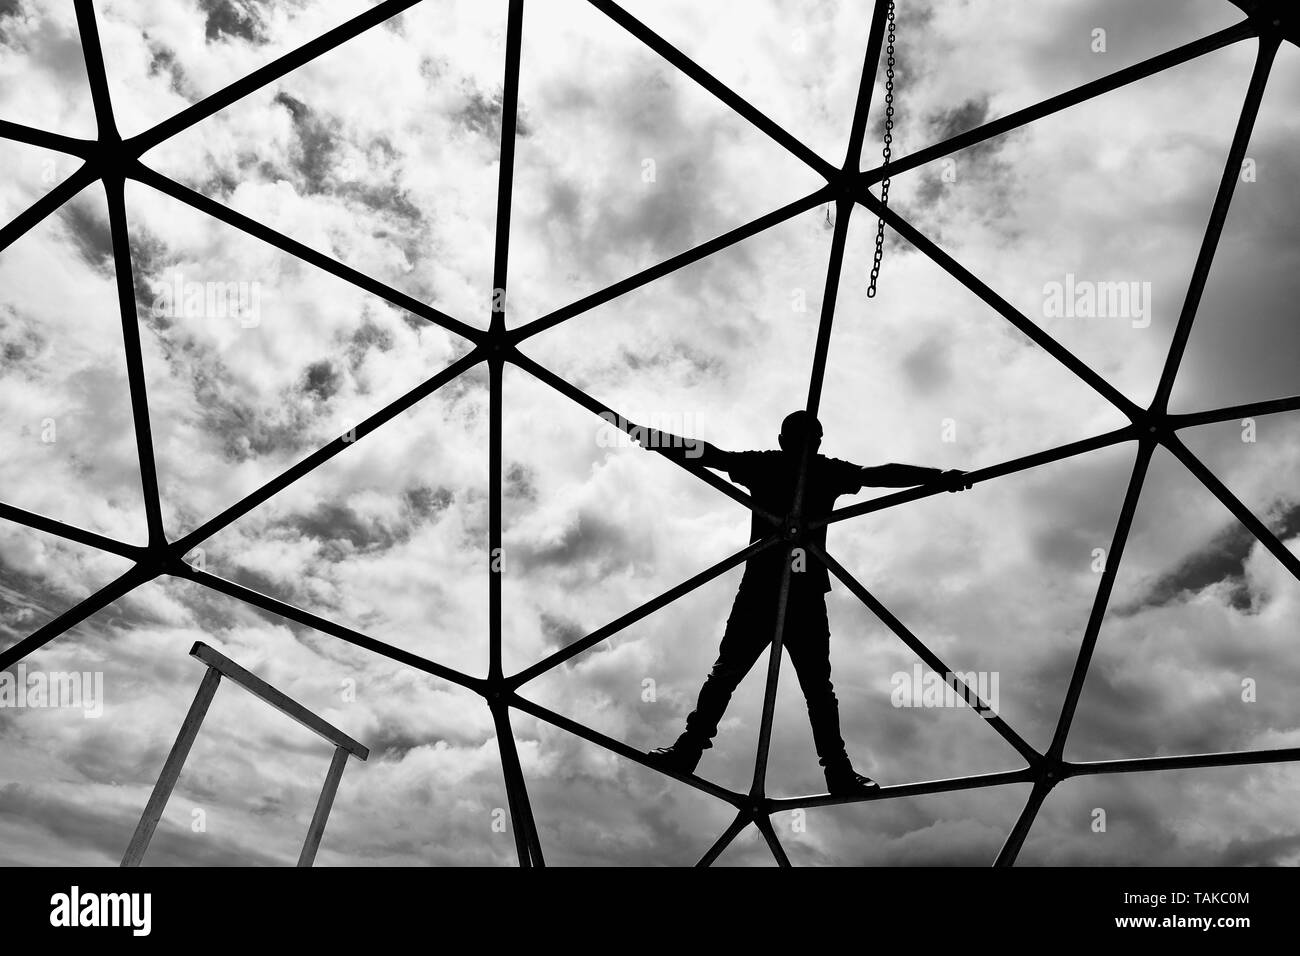 Equilibrium concept. Black and white image. Stock Photo